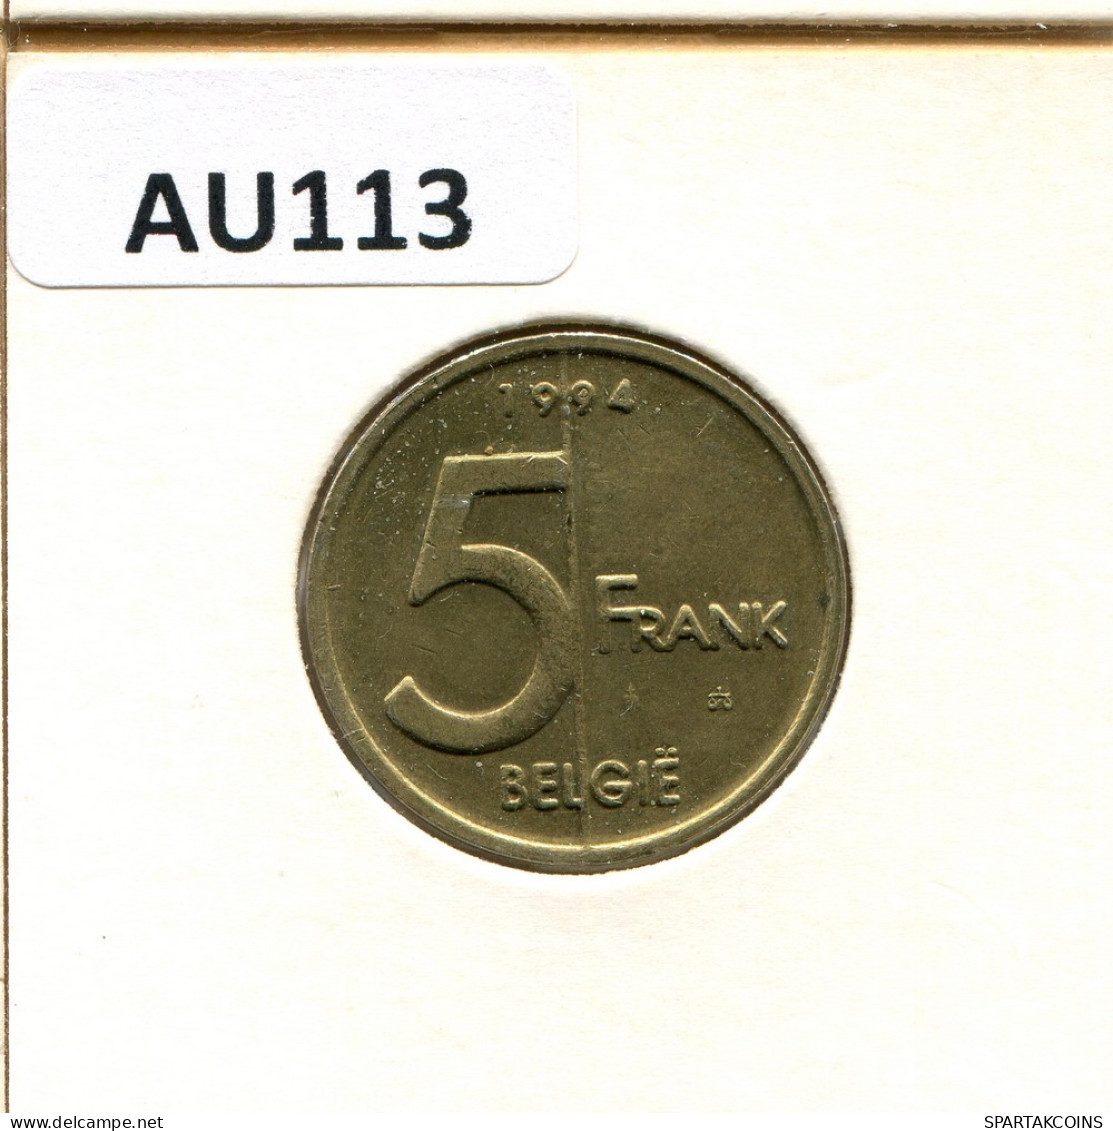 5 FRANCS 1994 DUTCH Text BELGIUM Coin #AU113.U - 5 Frank